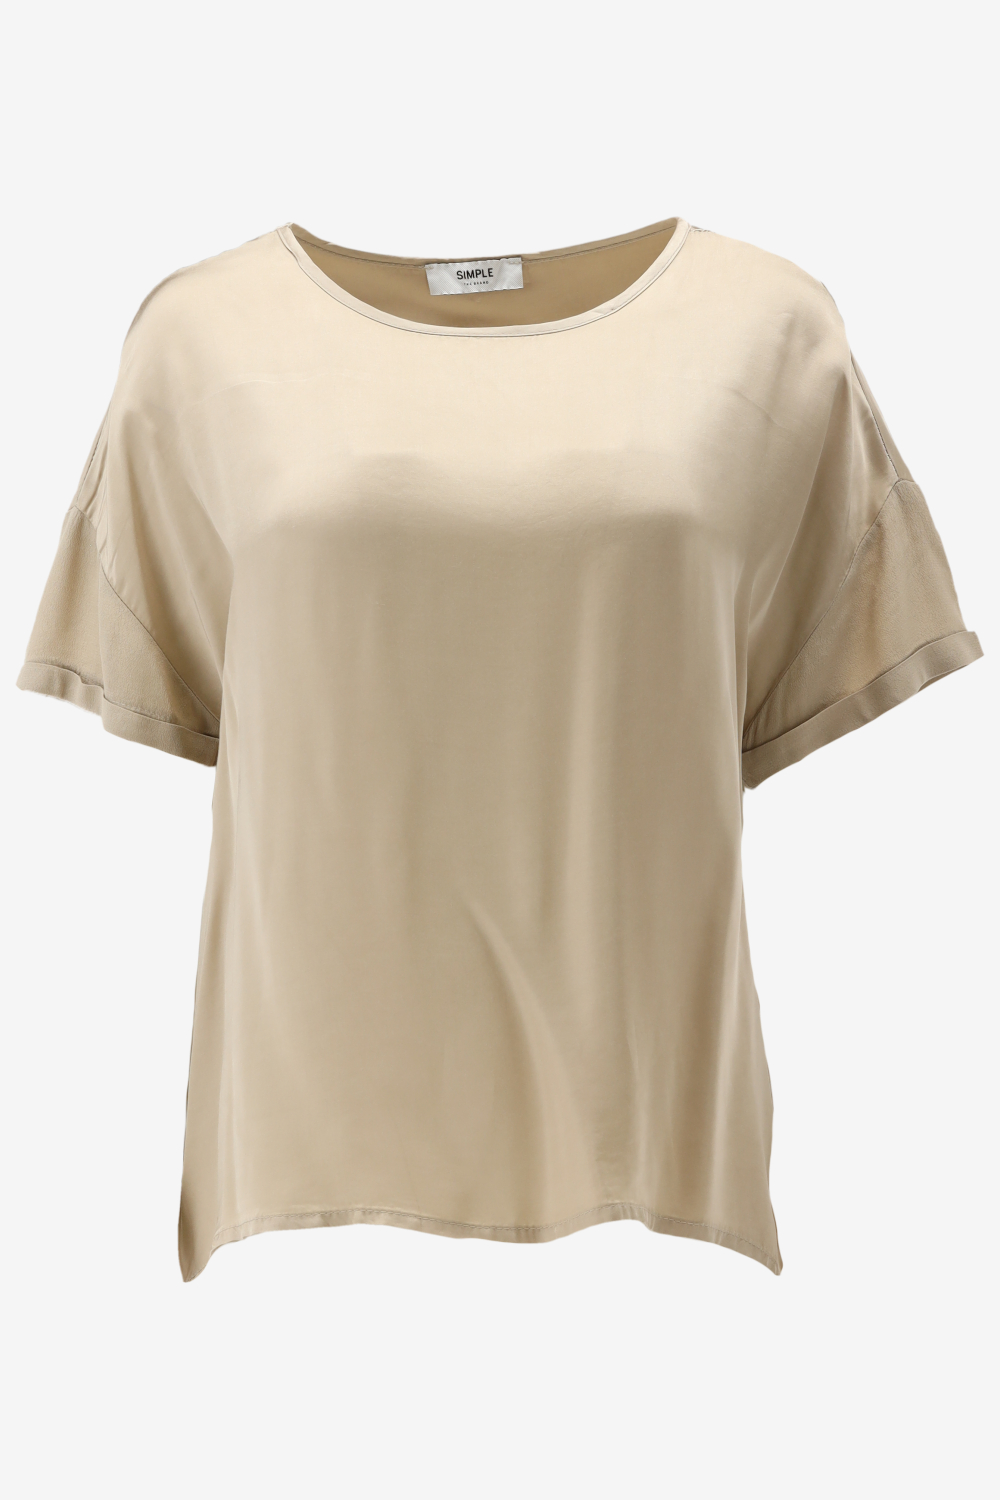 Simple Anki Wv-vis-22-3 Tops & T-shirts Dames - Shirt - Beige - Maat XS